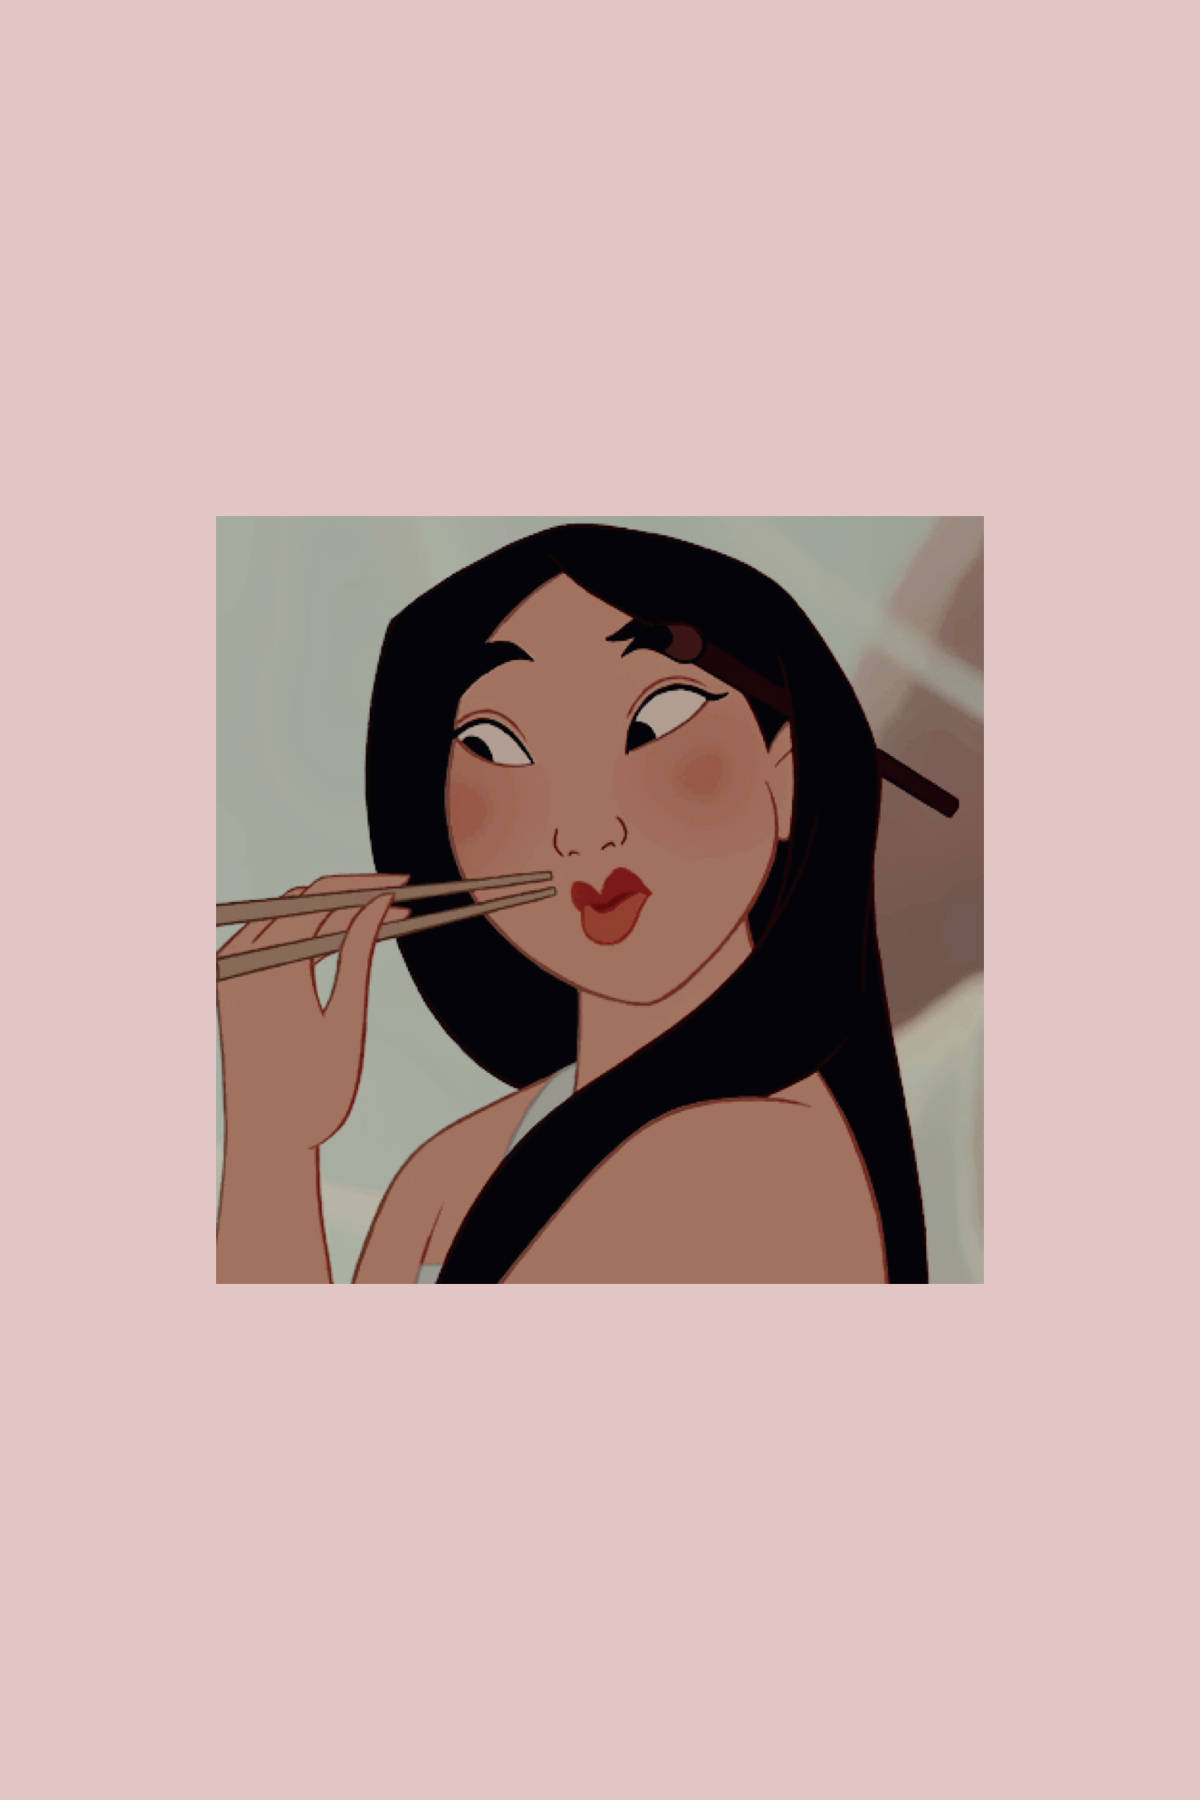 Aesthetic Cartoon Mulan Eating With Chopsticks Wallpaper